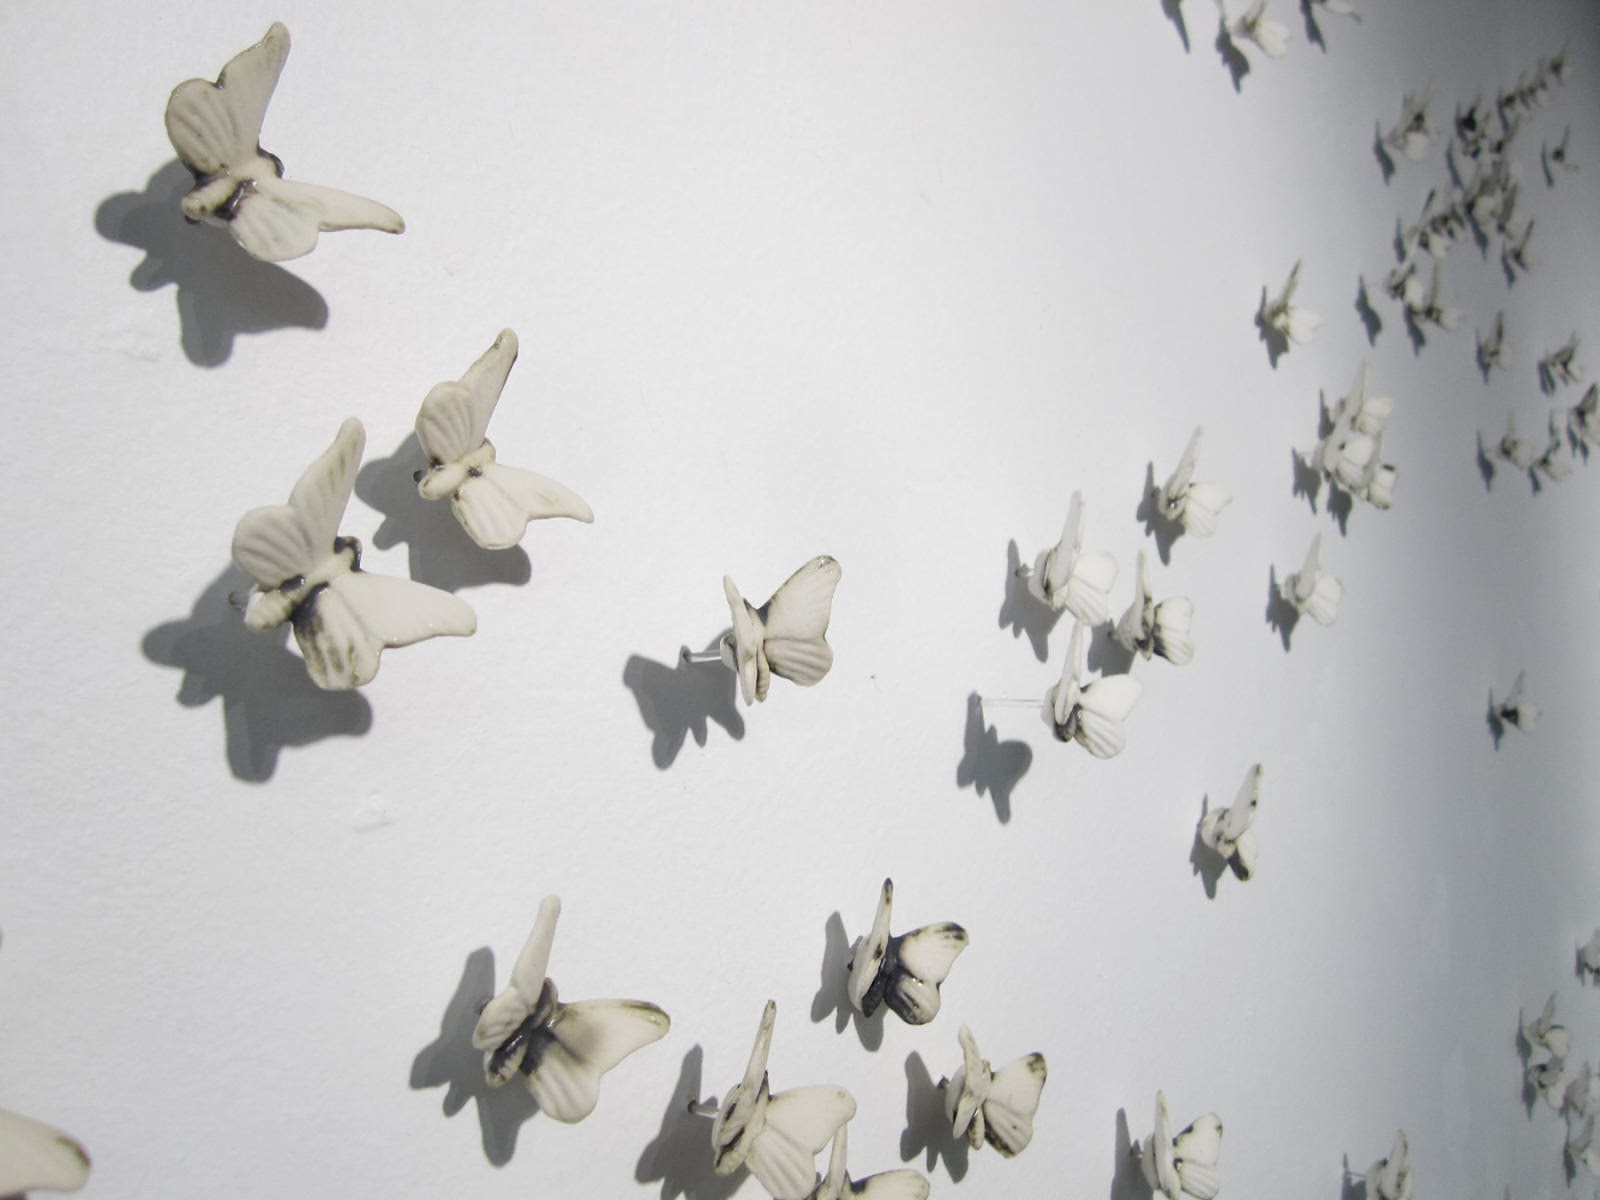 The Way Home, ceramic installation by Novie Trump at Art Wynwood 2014